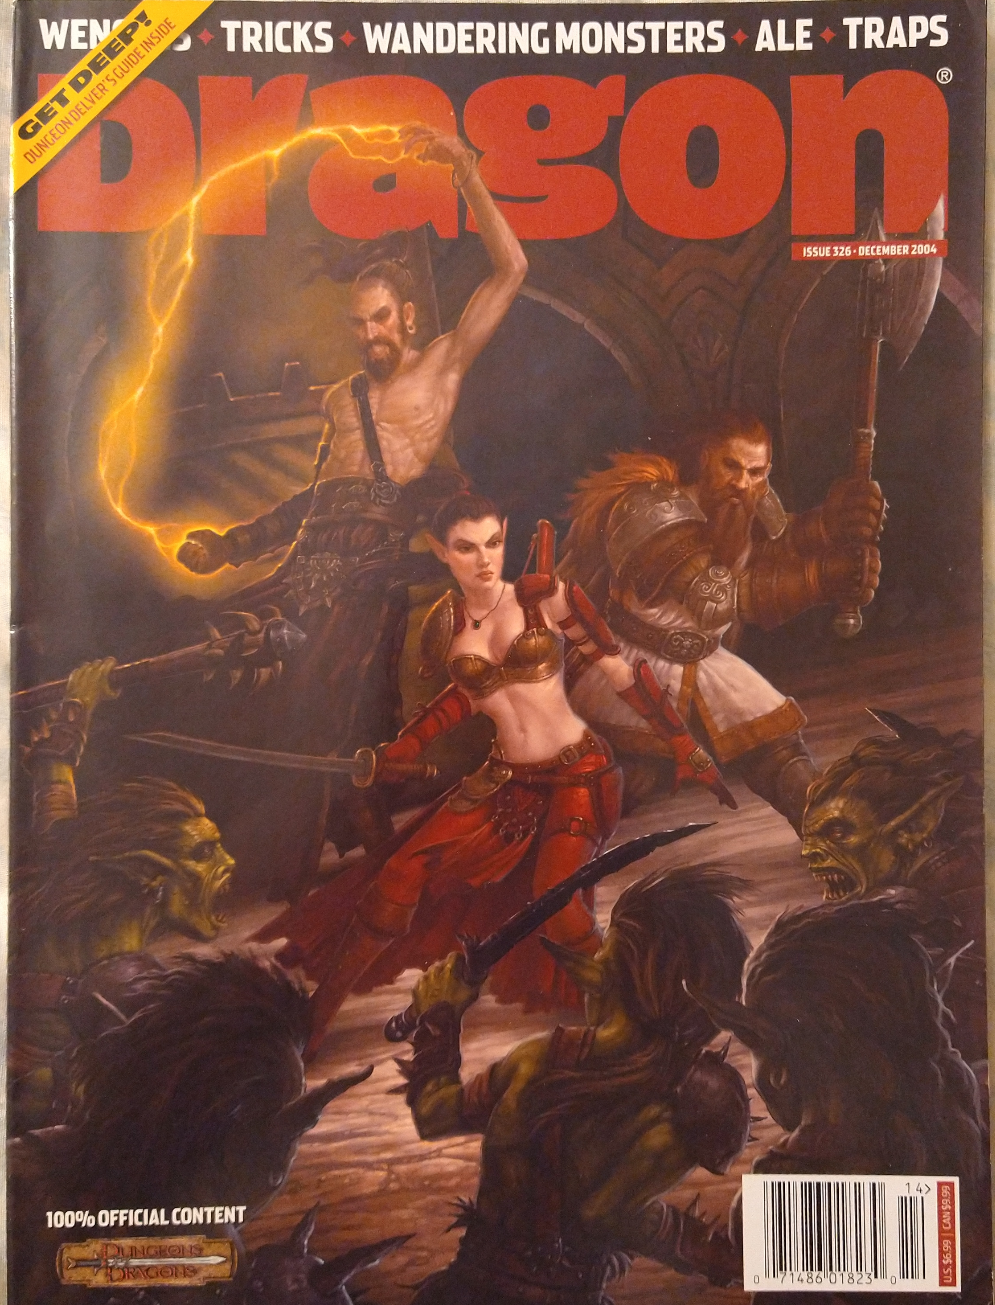 Dragon Magazine #326